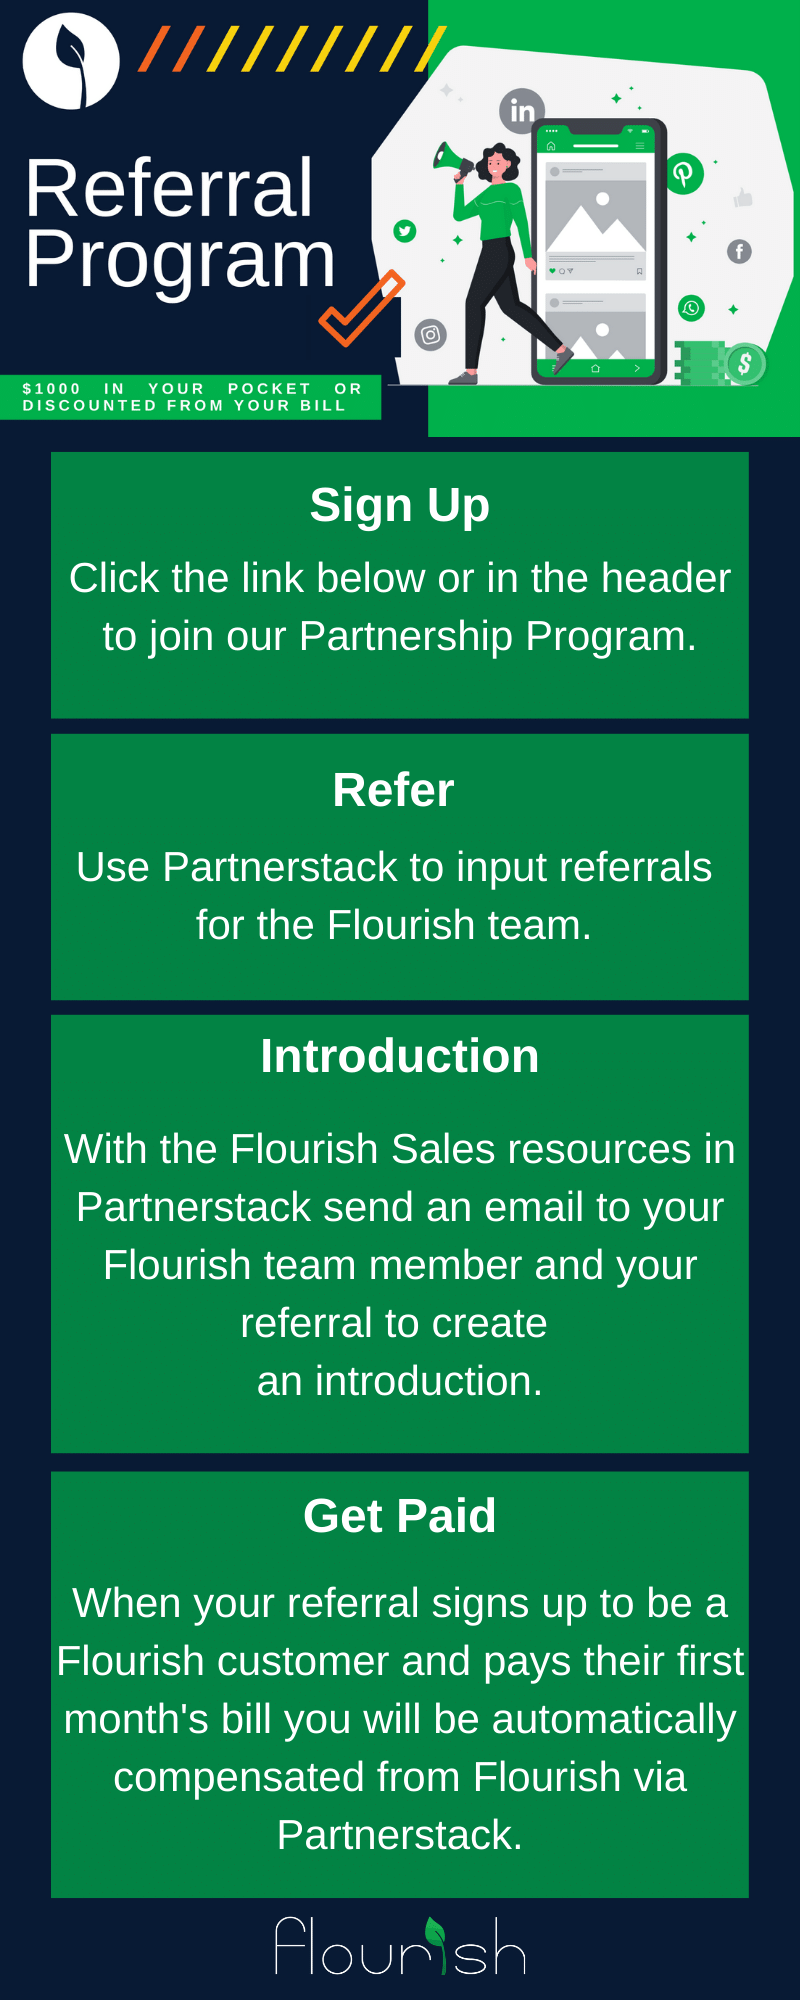 Partnership Program infographic